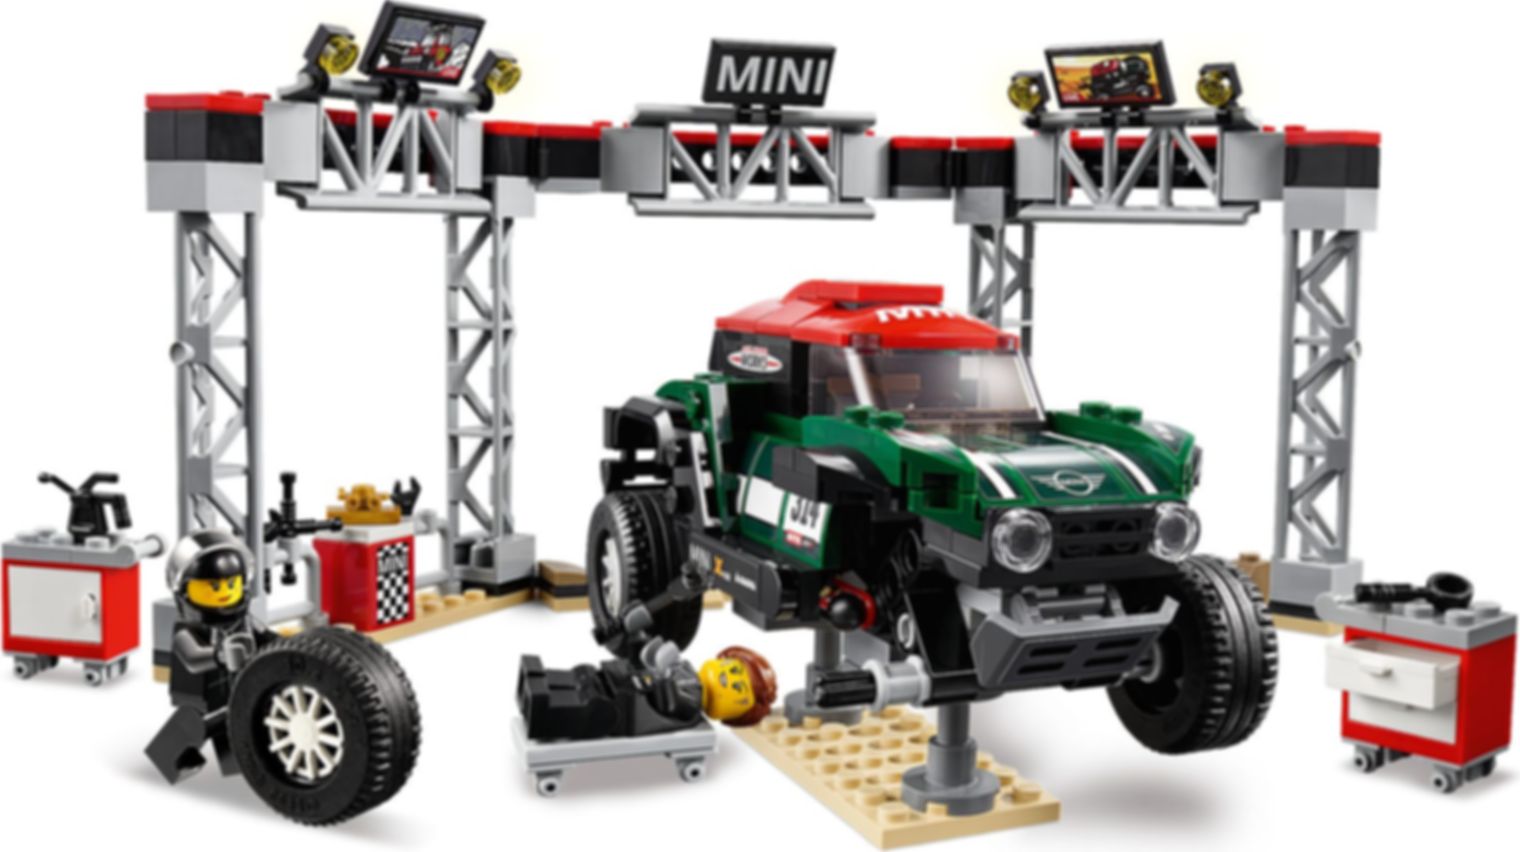 LEGO® Speed Champions Rallyeauto 1967 Mini Cooper S und Buggy 2018 Mini John Cooper Works spielablauf